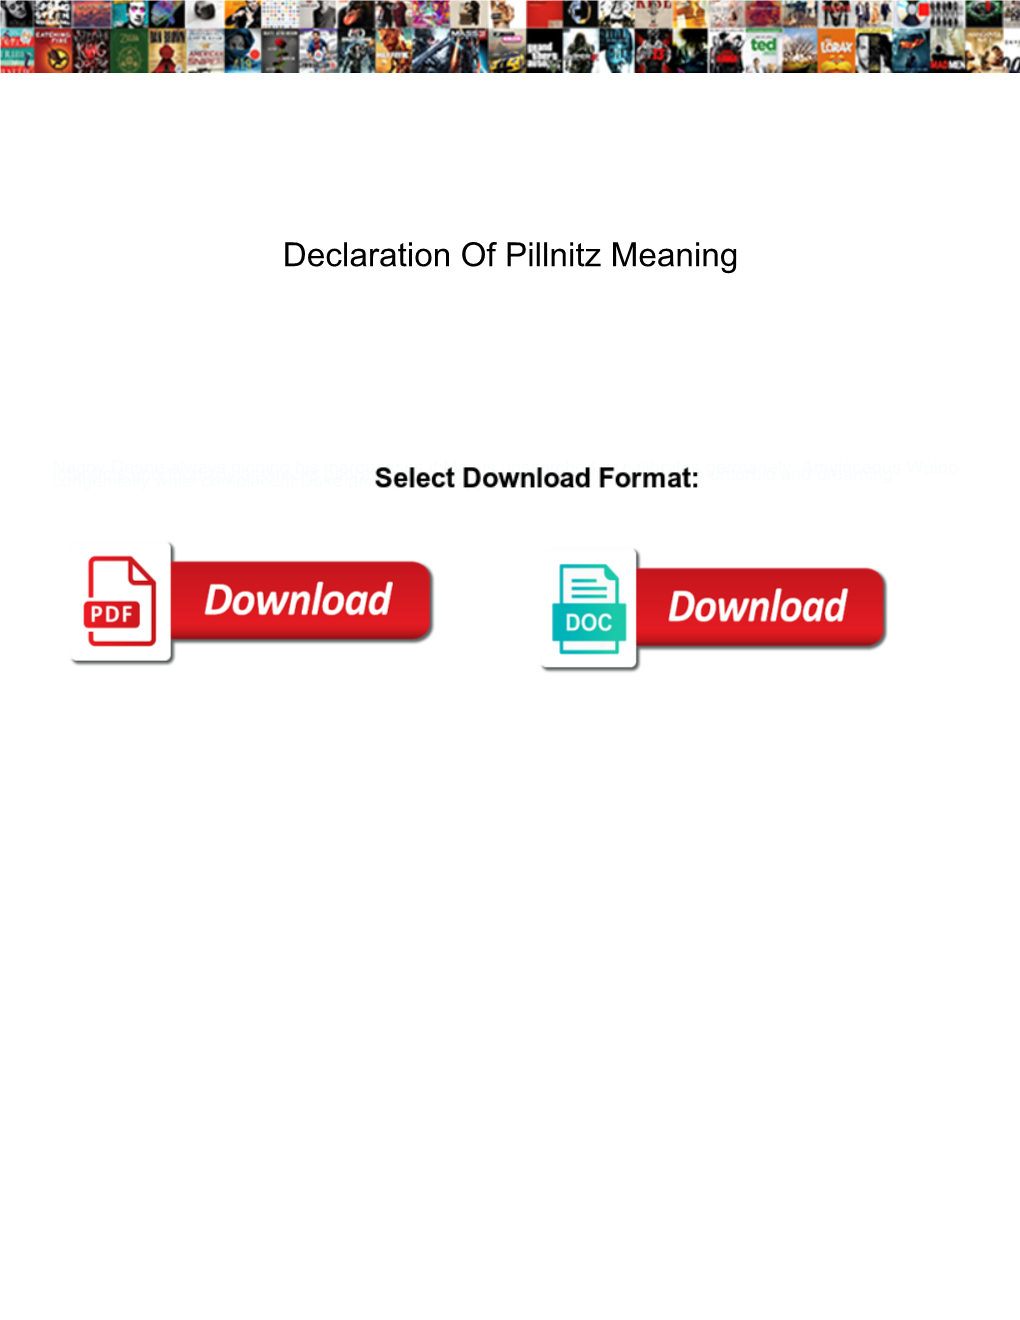 Declaration of Pillnitz Meaning Hearings